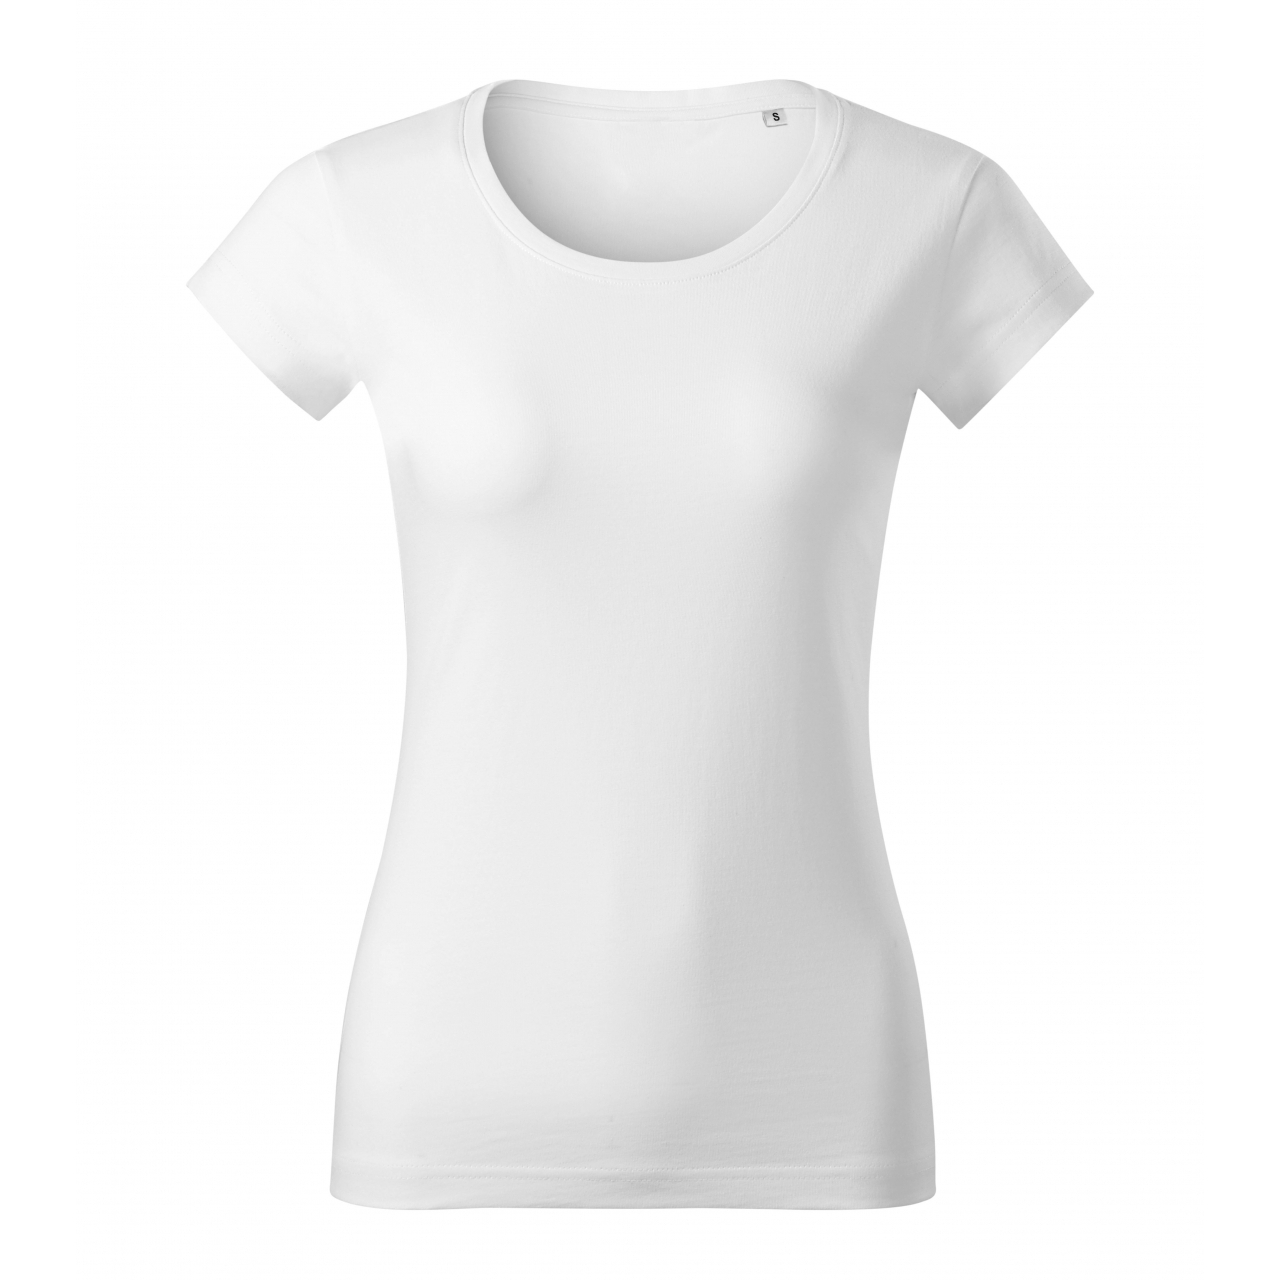 Tričko dámské Malfini Viper Free - bílé, XL